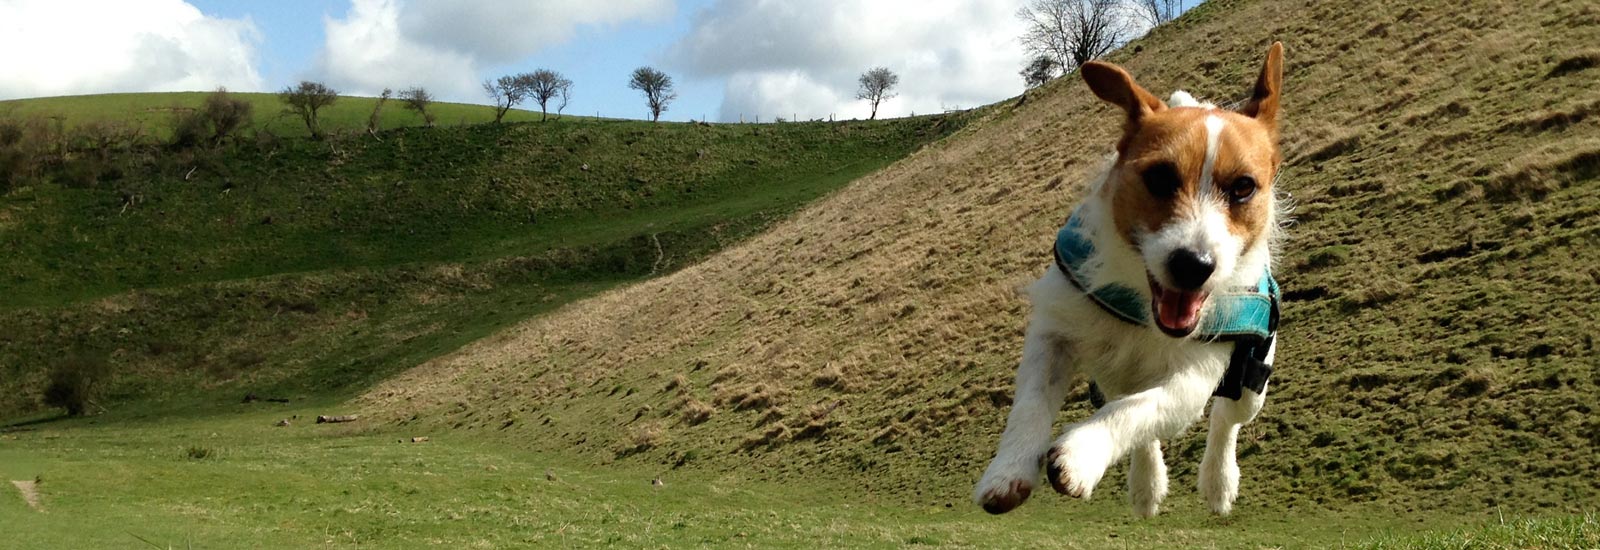 Outdoor Hounds dog walking - Jack Russel enjoying his run